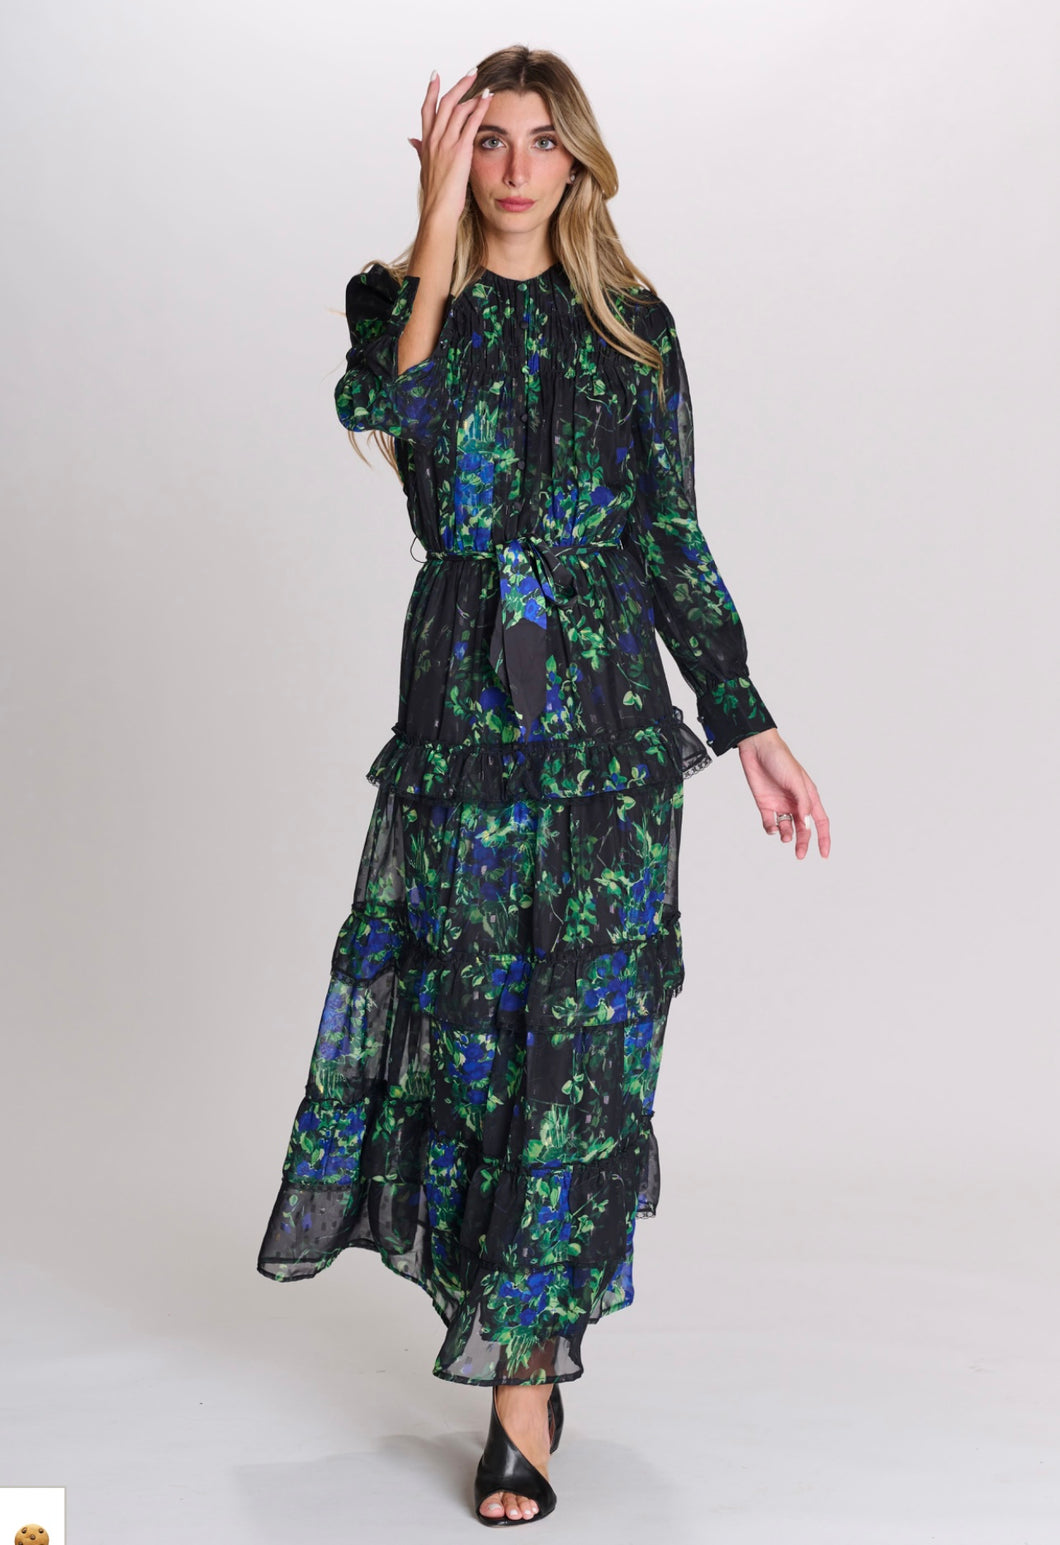 MW Black Chiffon W Blue/Green Floral Dress 332261